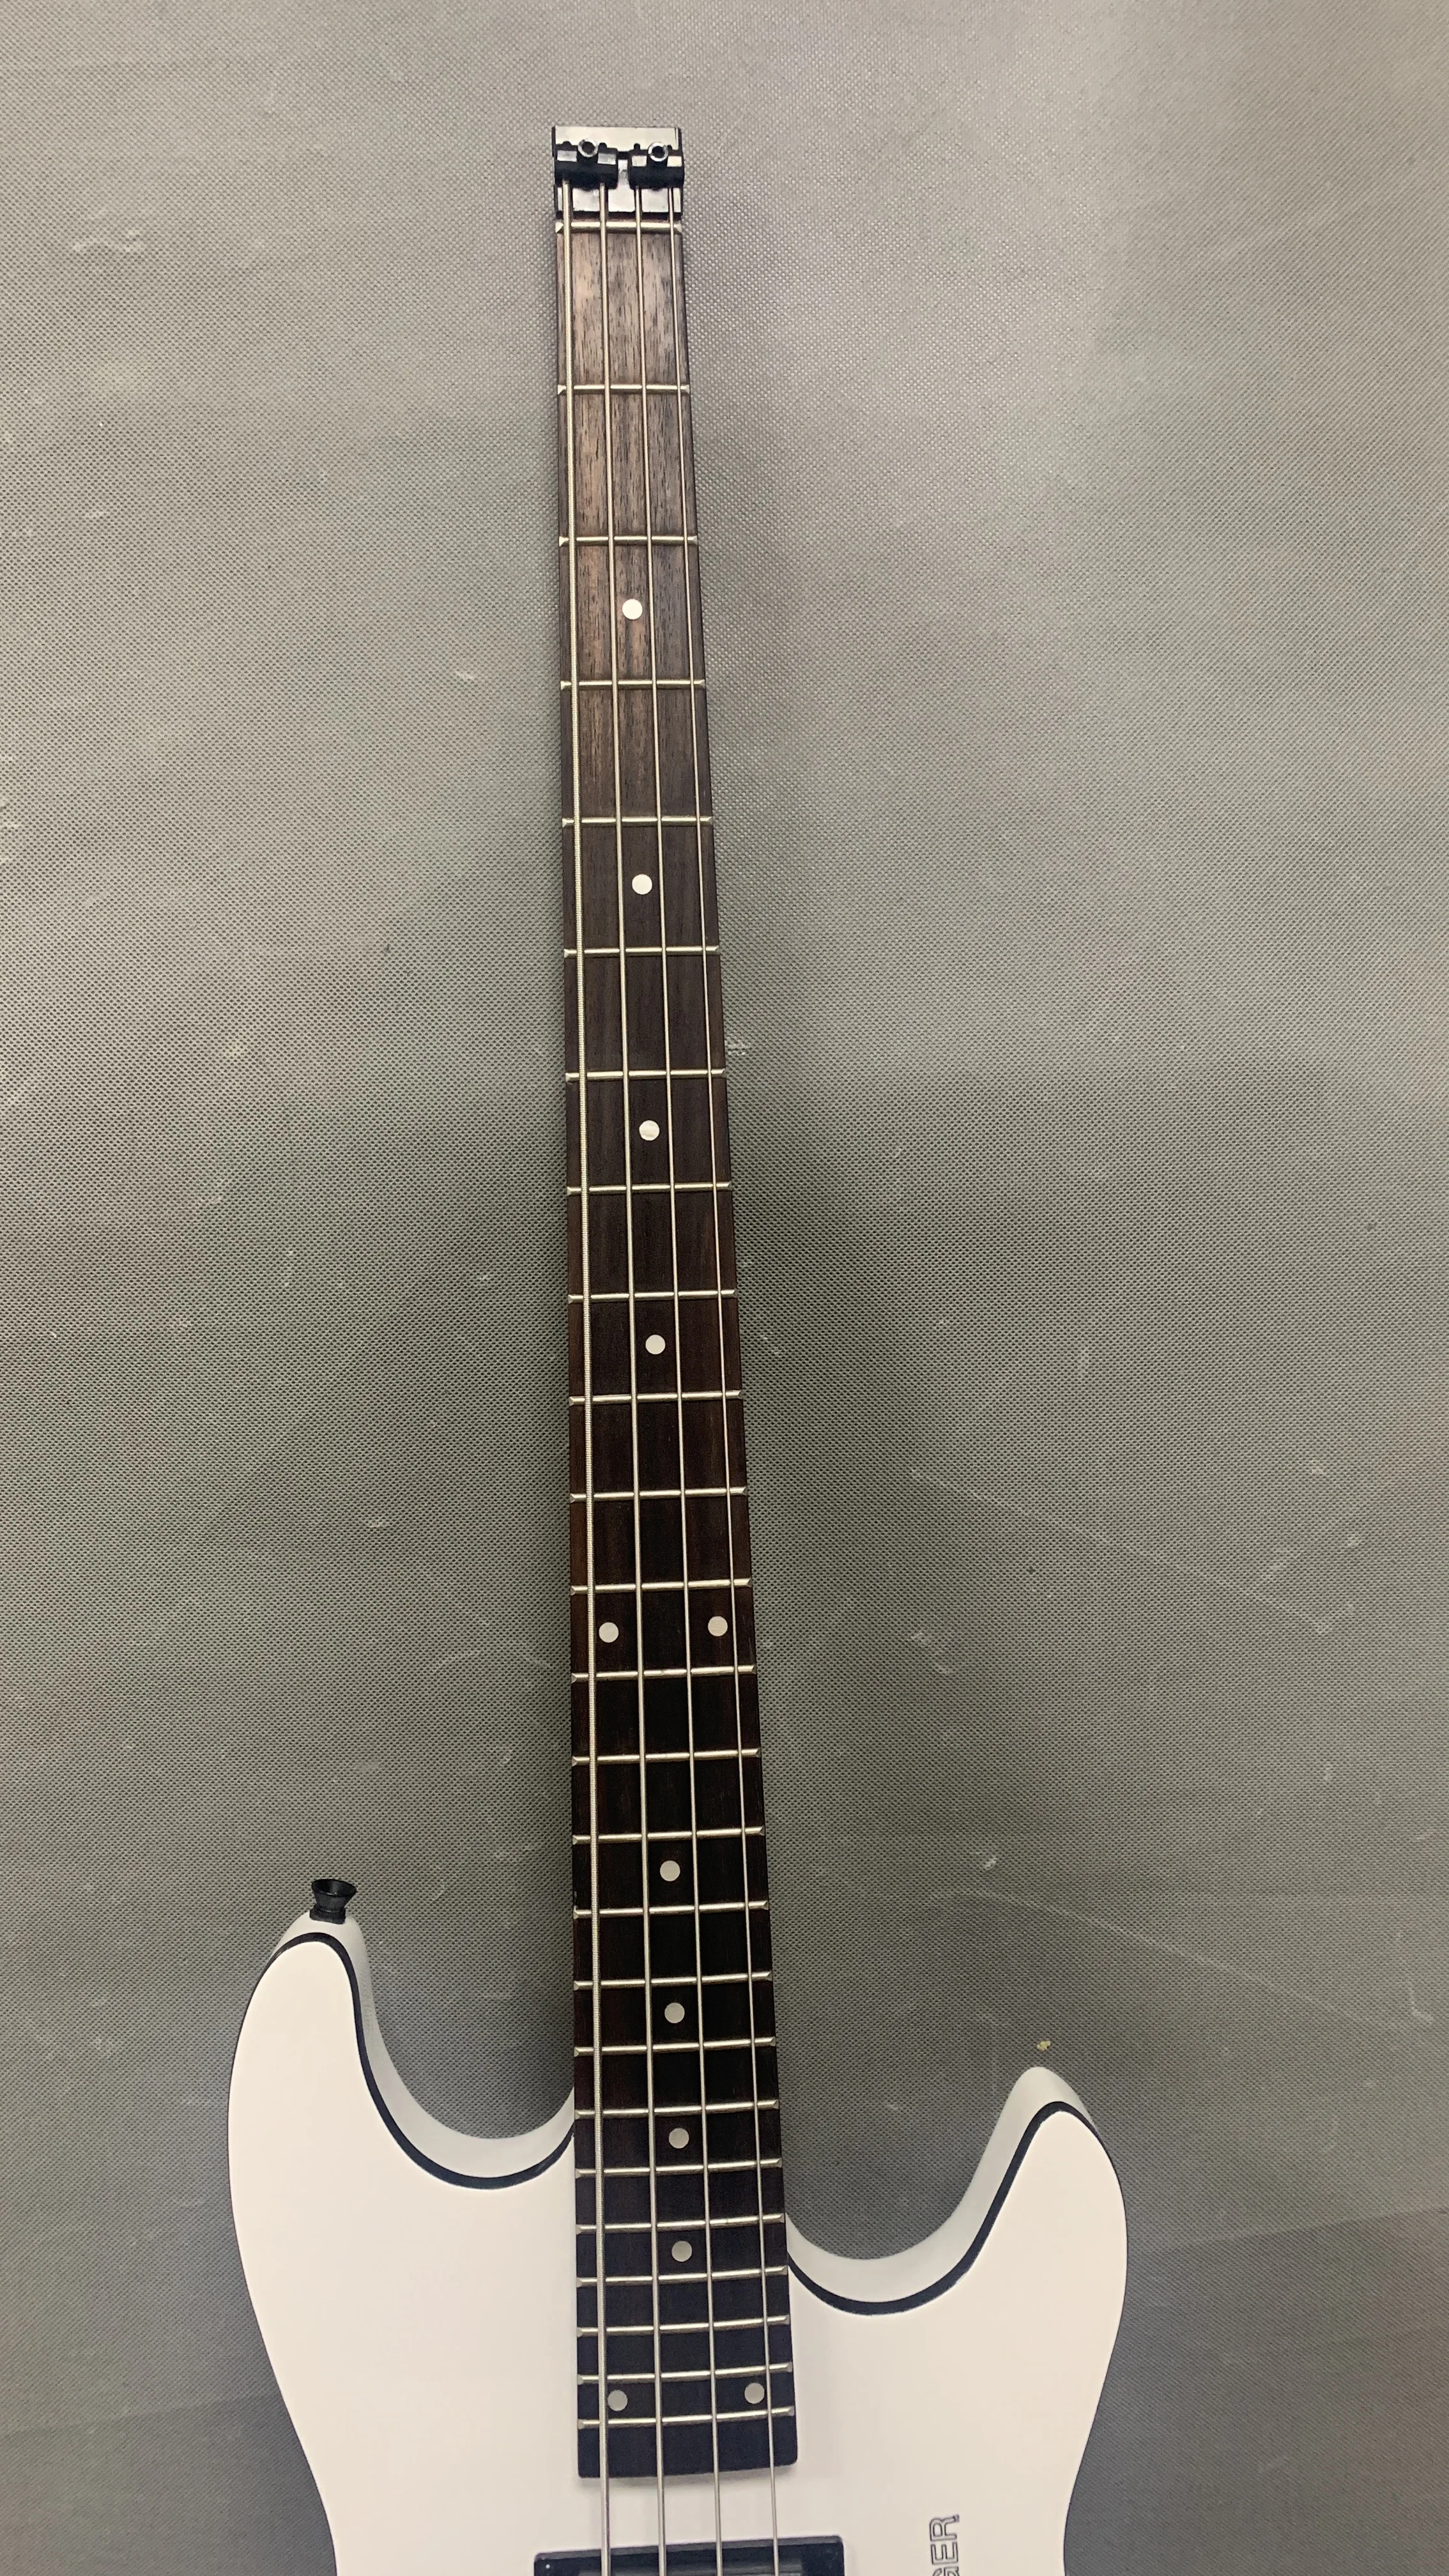 Classic 4-string headless bass guitar, white body black neck, high-end headless bridge, custom headless guitar of various styles